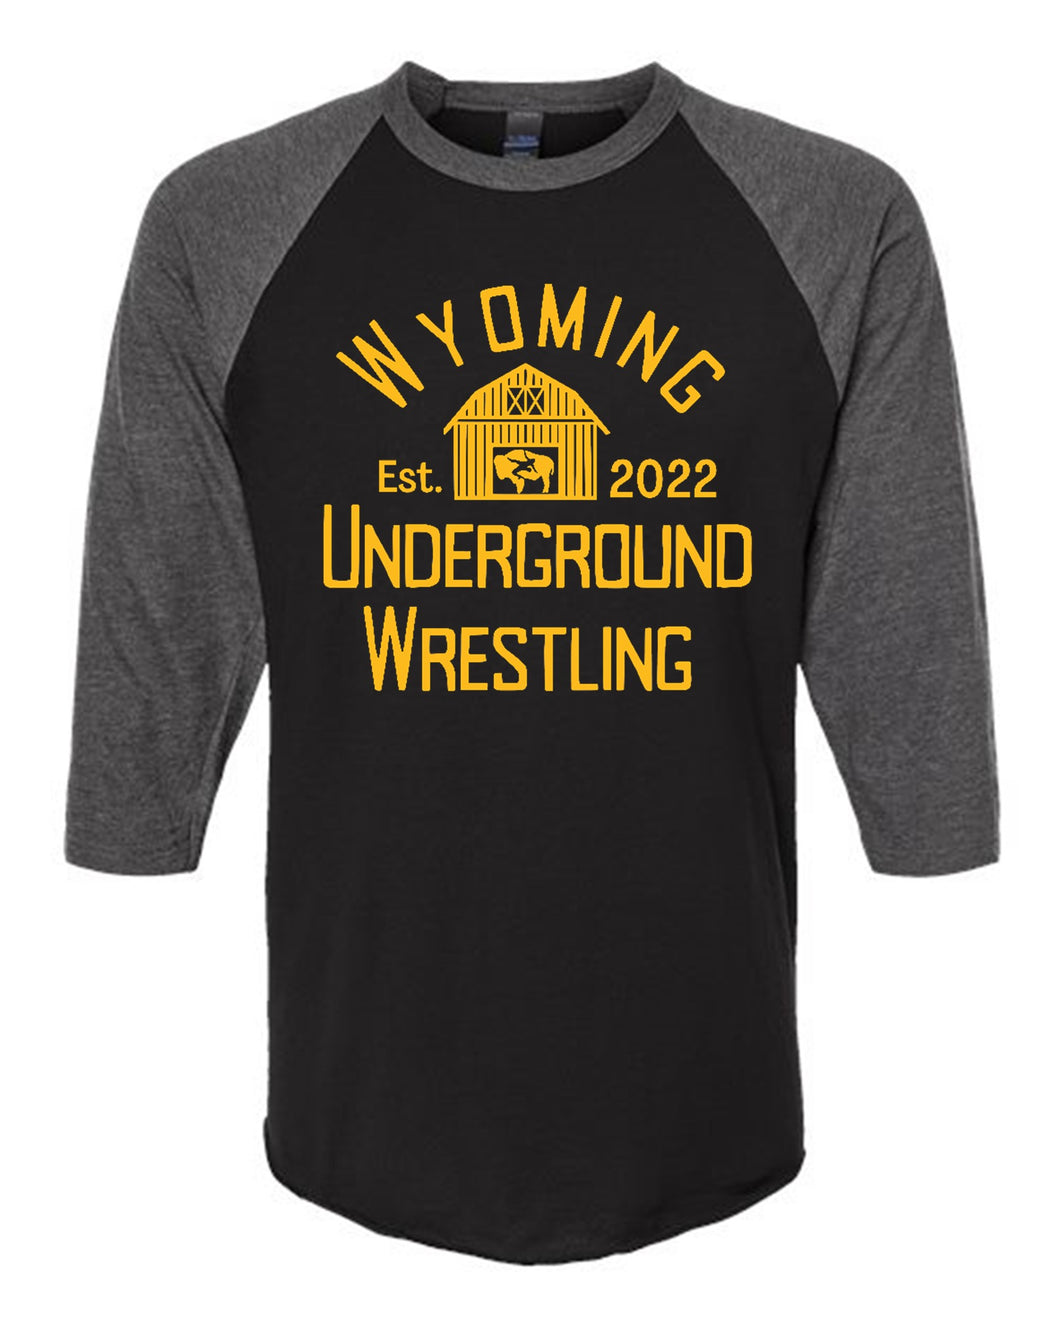 Wyoming Underground Wrestling Three-Quarter Raglan Shirt (Add'l Colors!)